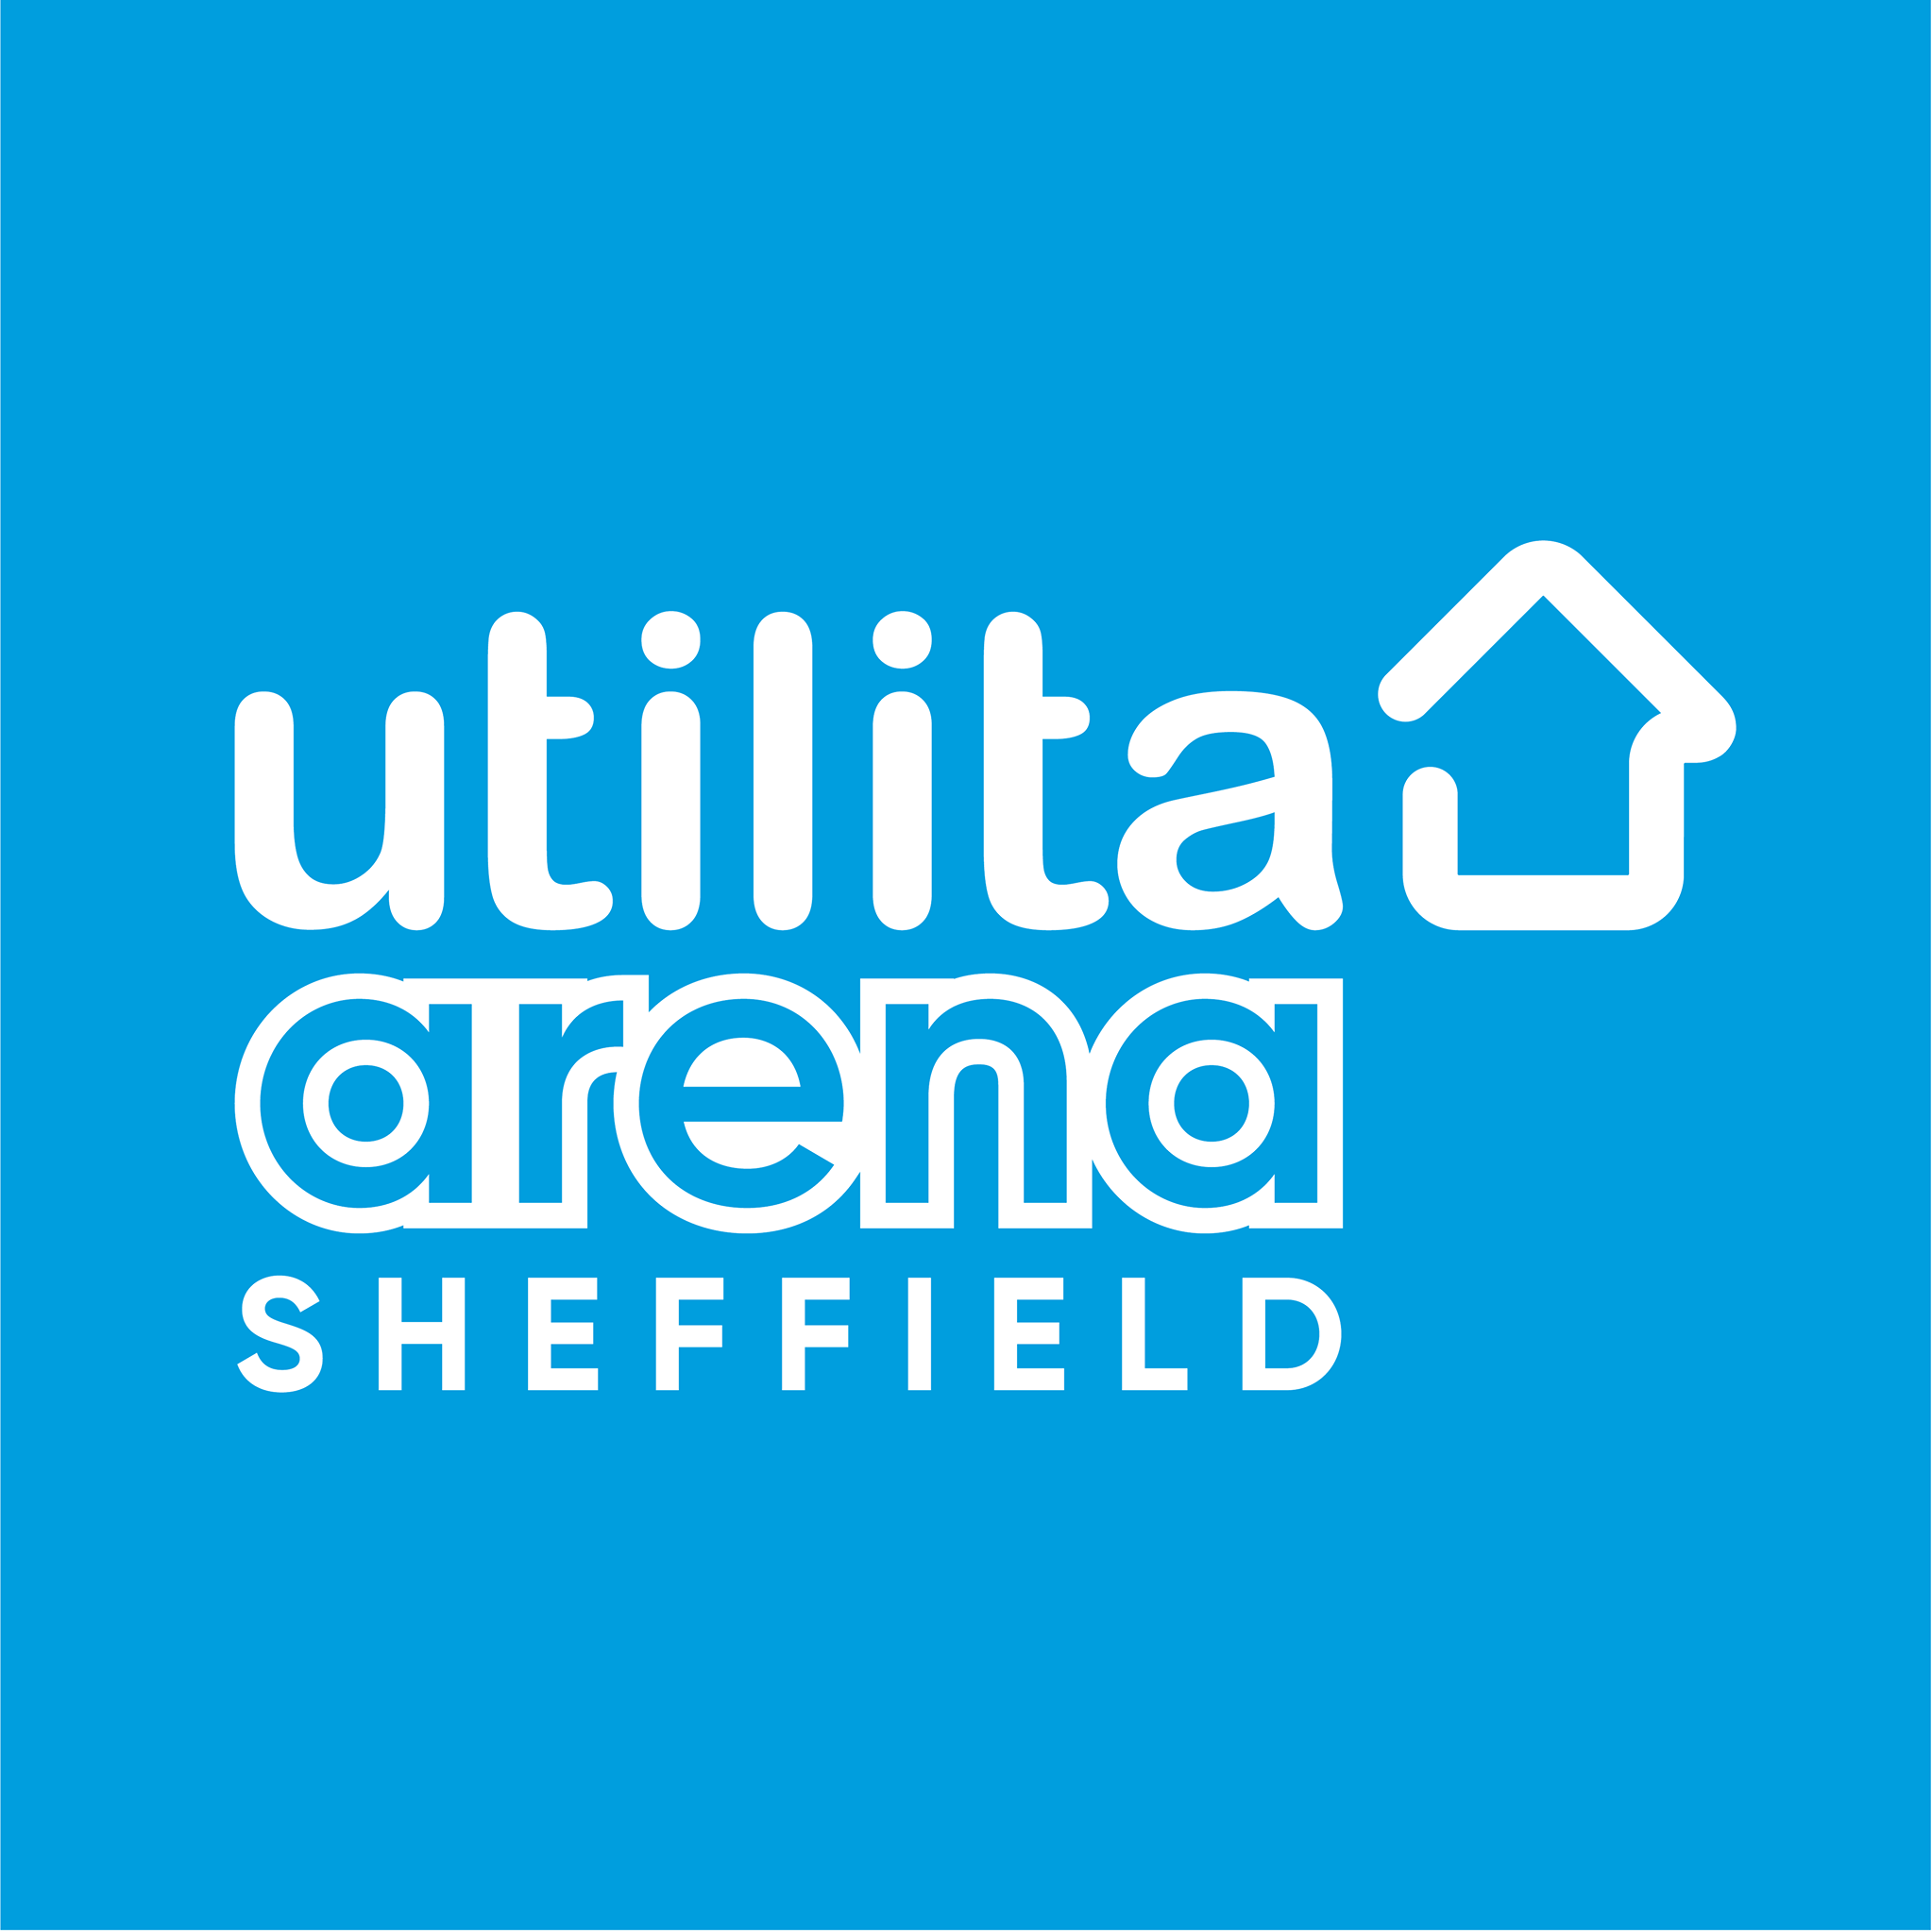 Les Miserables - The Arena Spectacular en Utilita Arena Sheffield Tickets